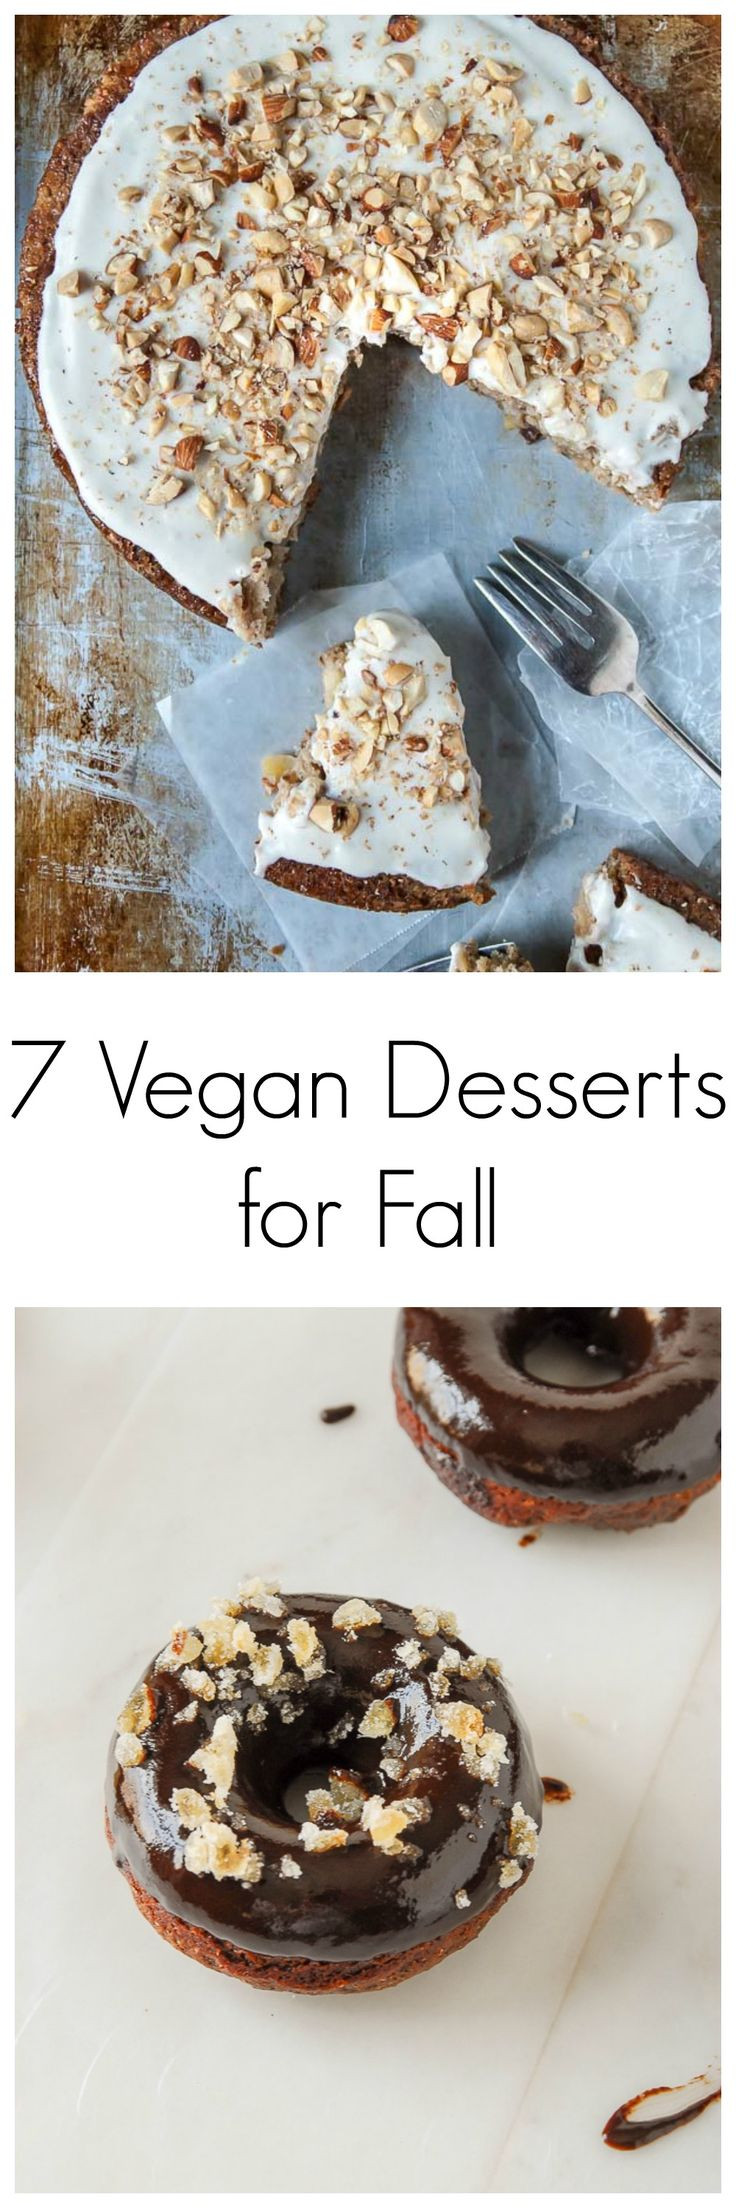 Vegan Fall Desserts
 1000 ideas about Vegan Desserts on Pinterest